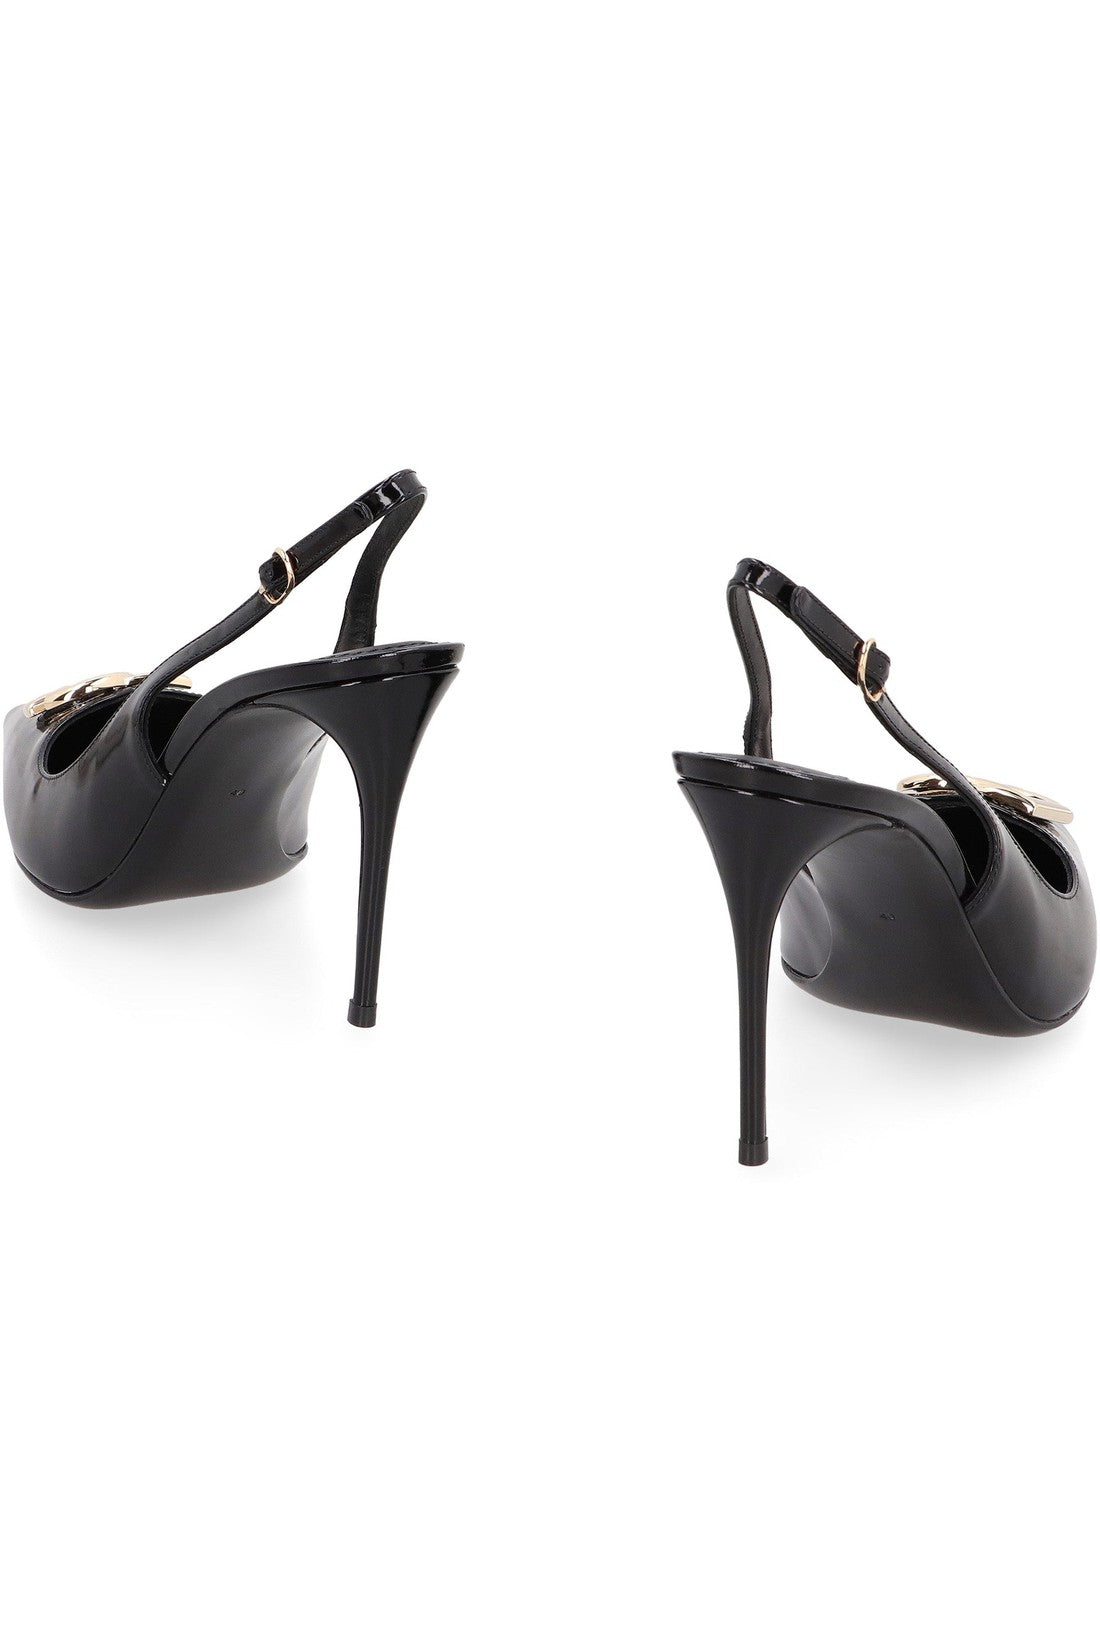 Dolce & Gabbana-OUTLET-SALE-Leather slingback pumps-ARCHIVIST